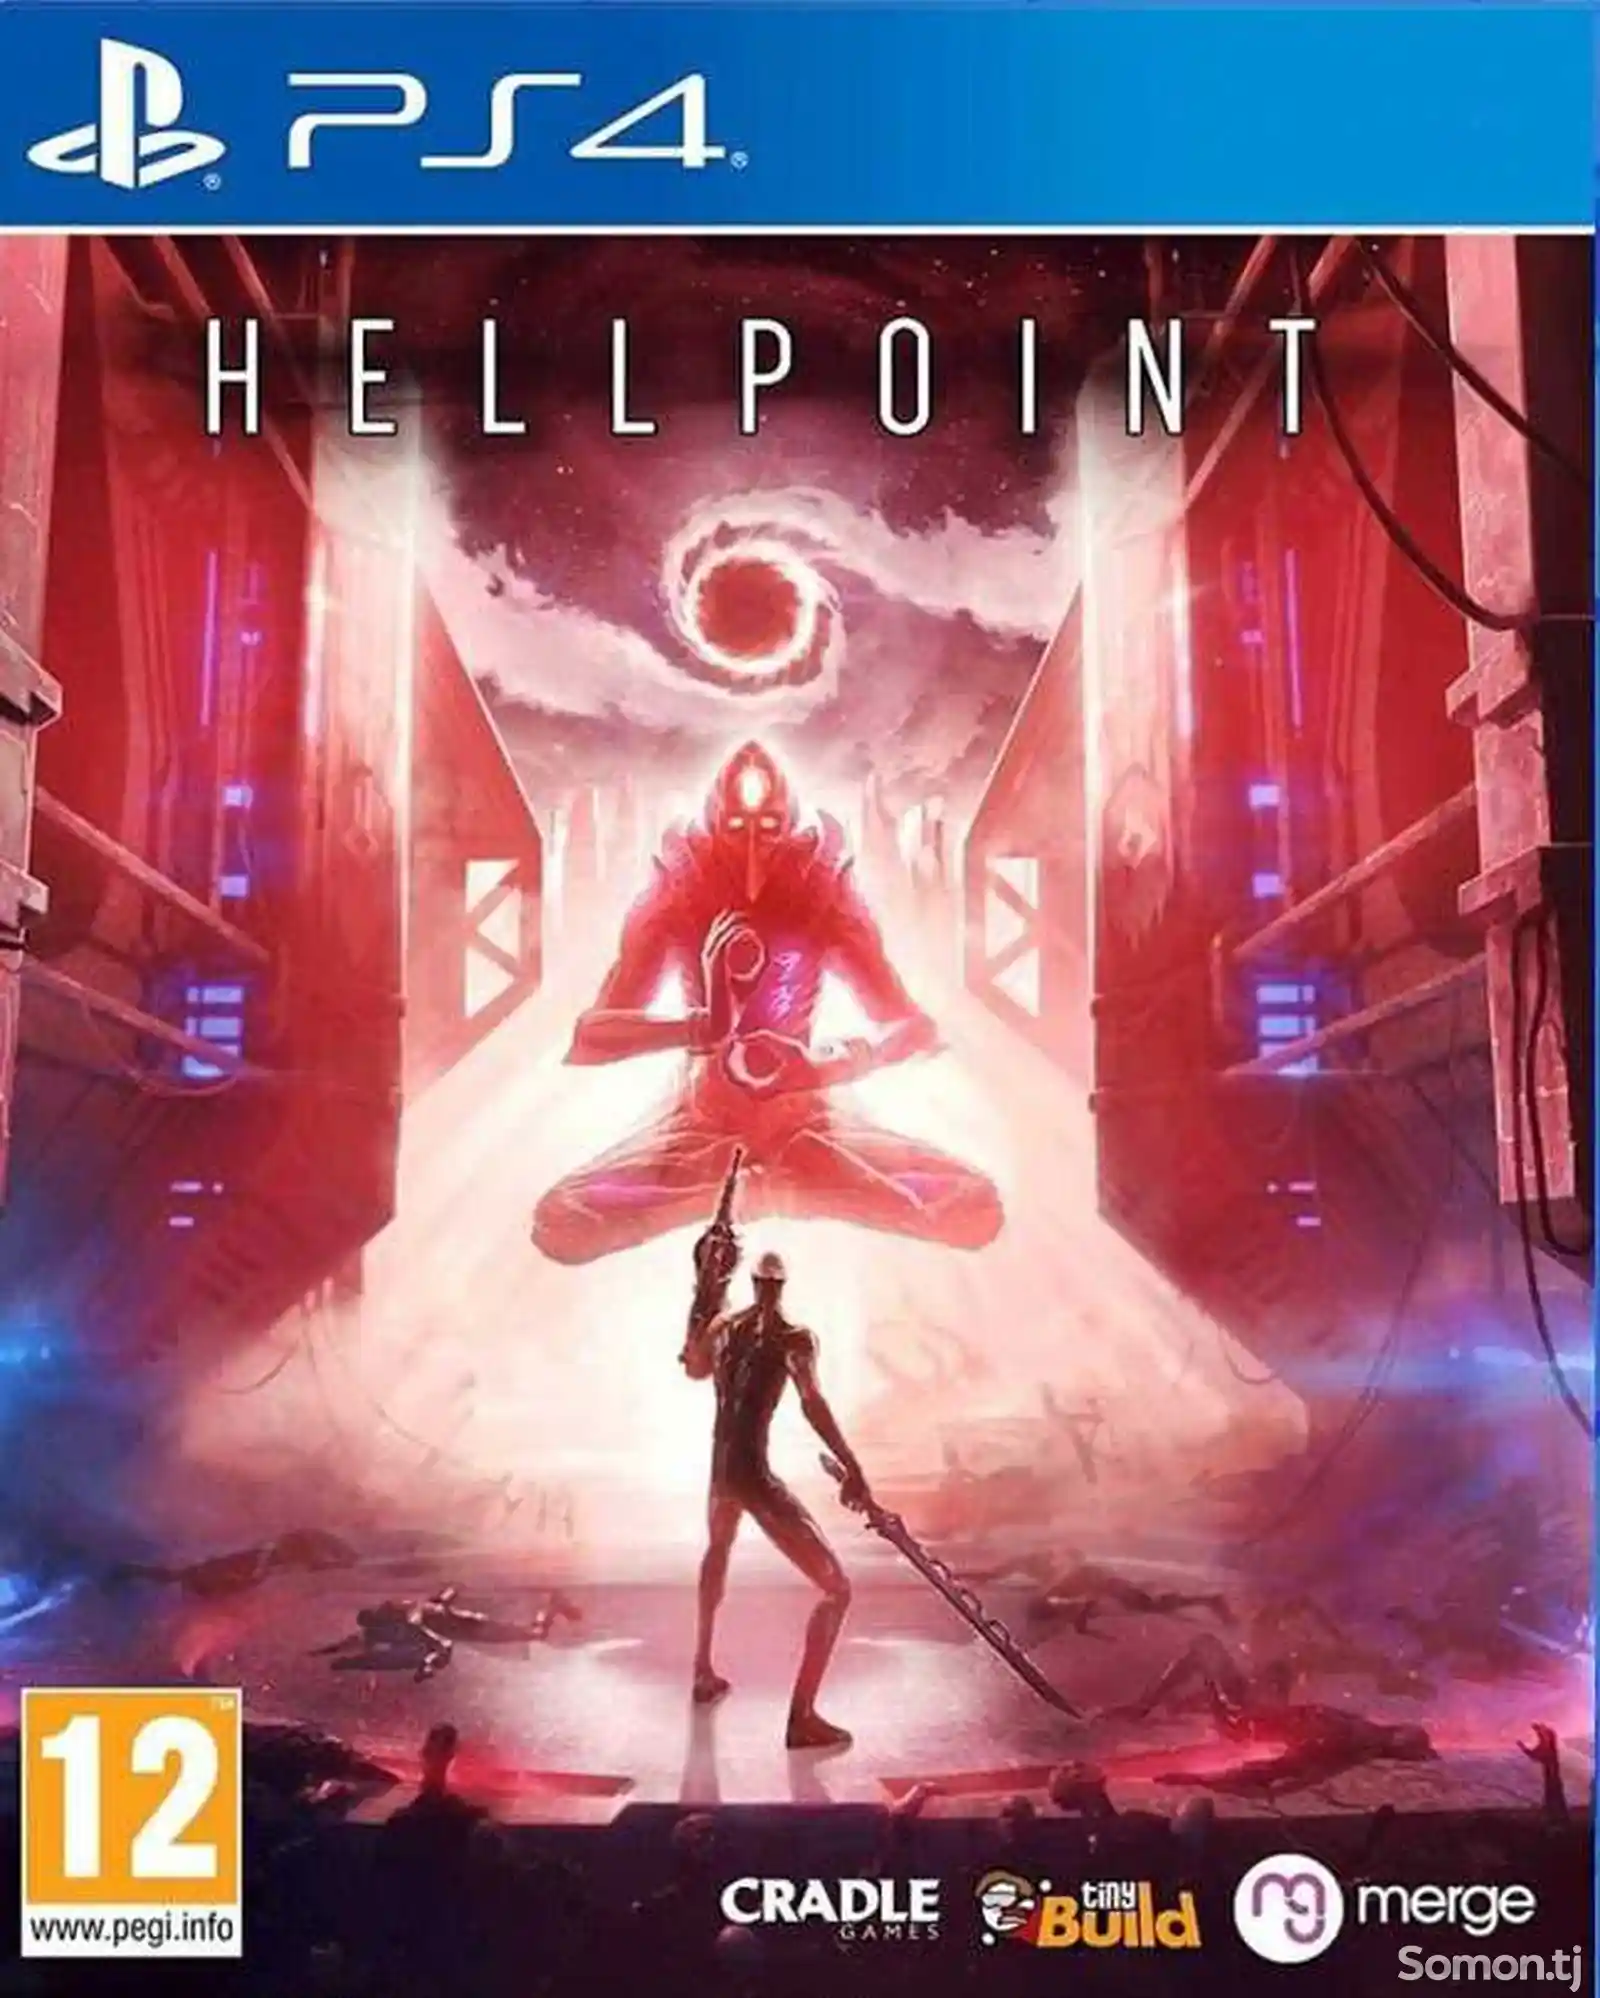 Игра Hellpoint для PS-4 / 5.05 / 6.72 / 7.02 / 7.55 / 9.00 /-1